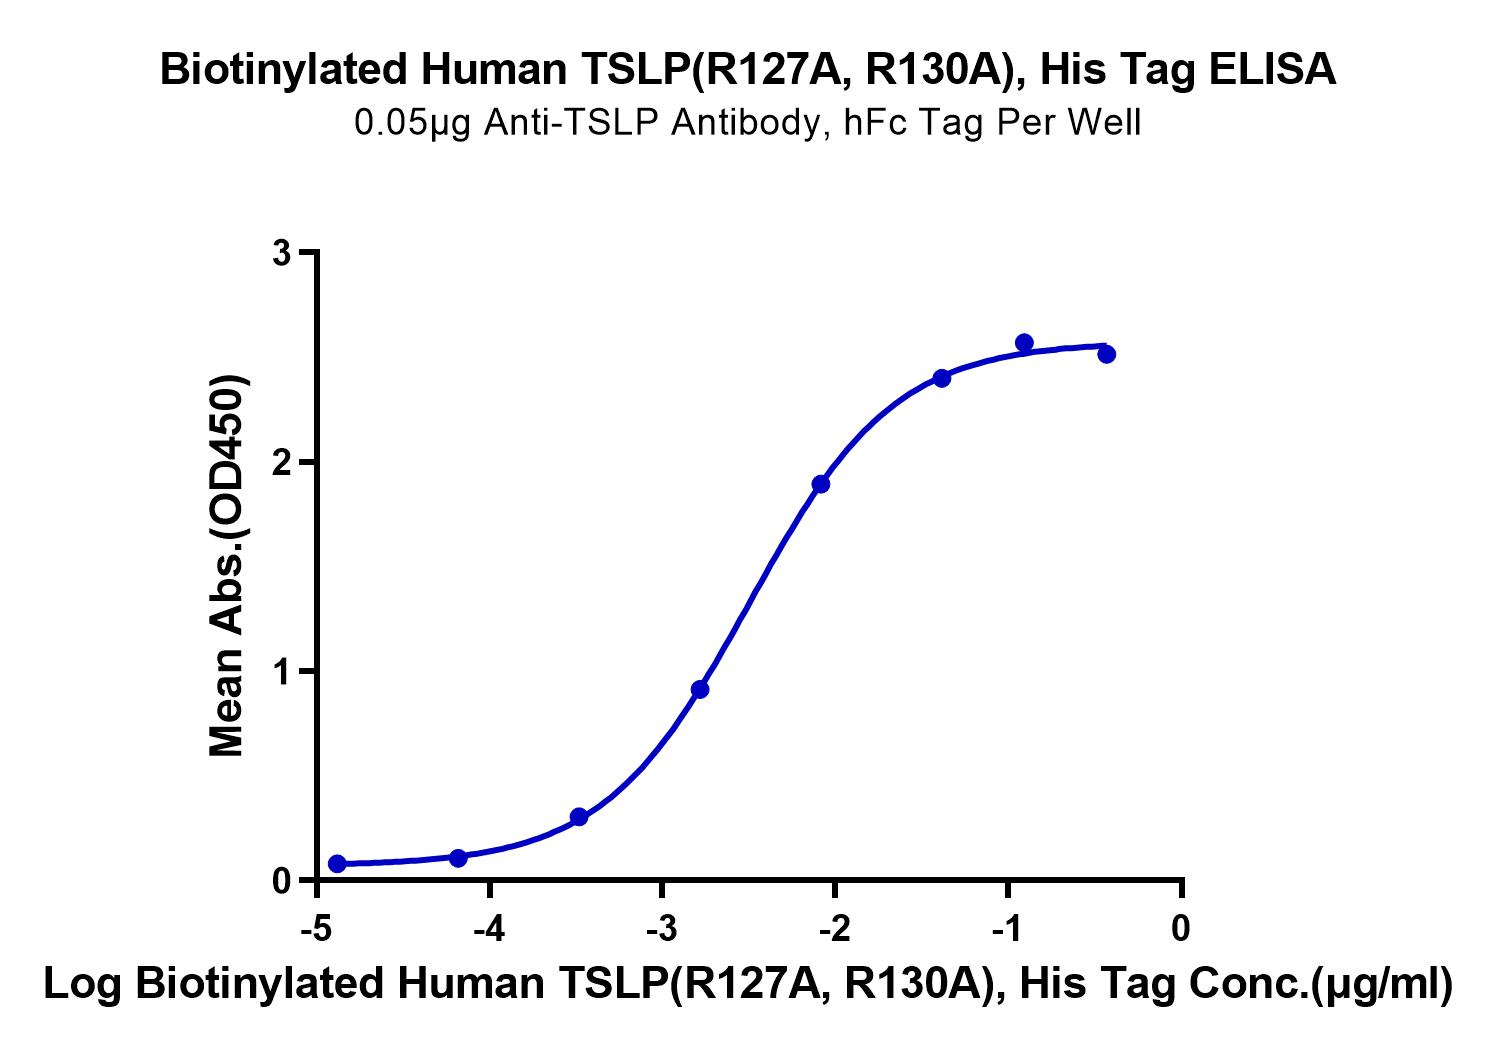 Biotinylated Human TSLP (R127A, R130A) Protein (LTP11078)